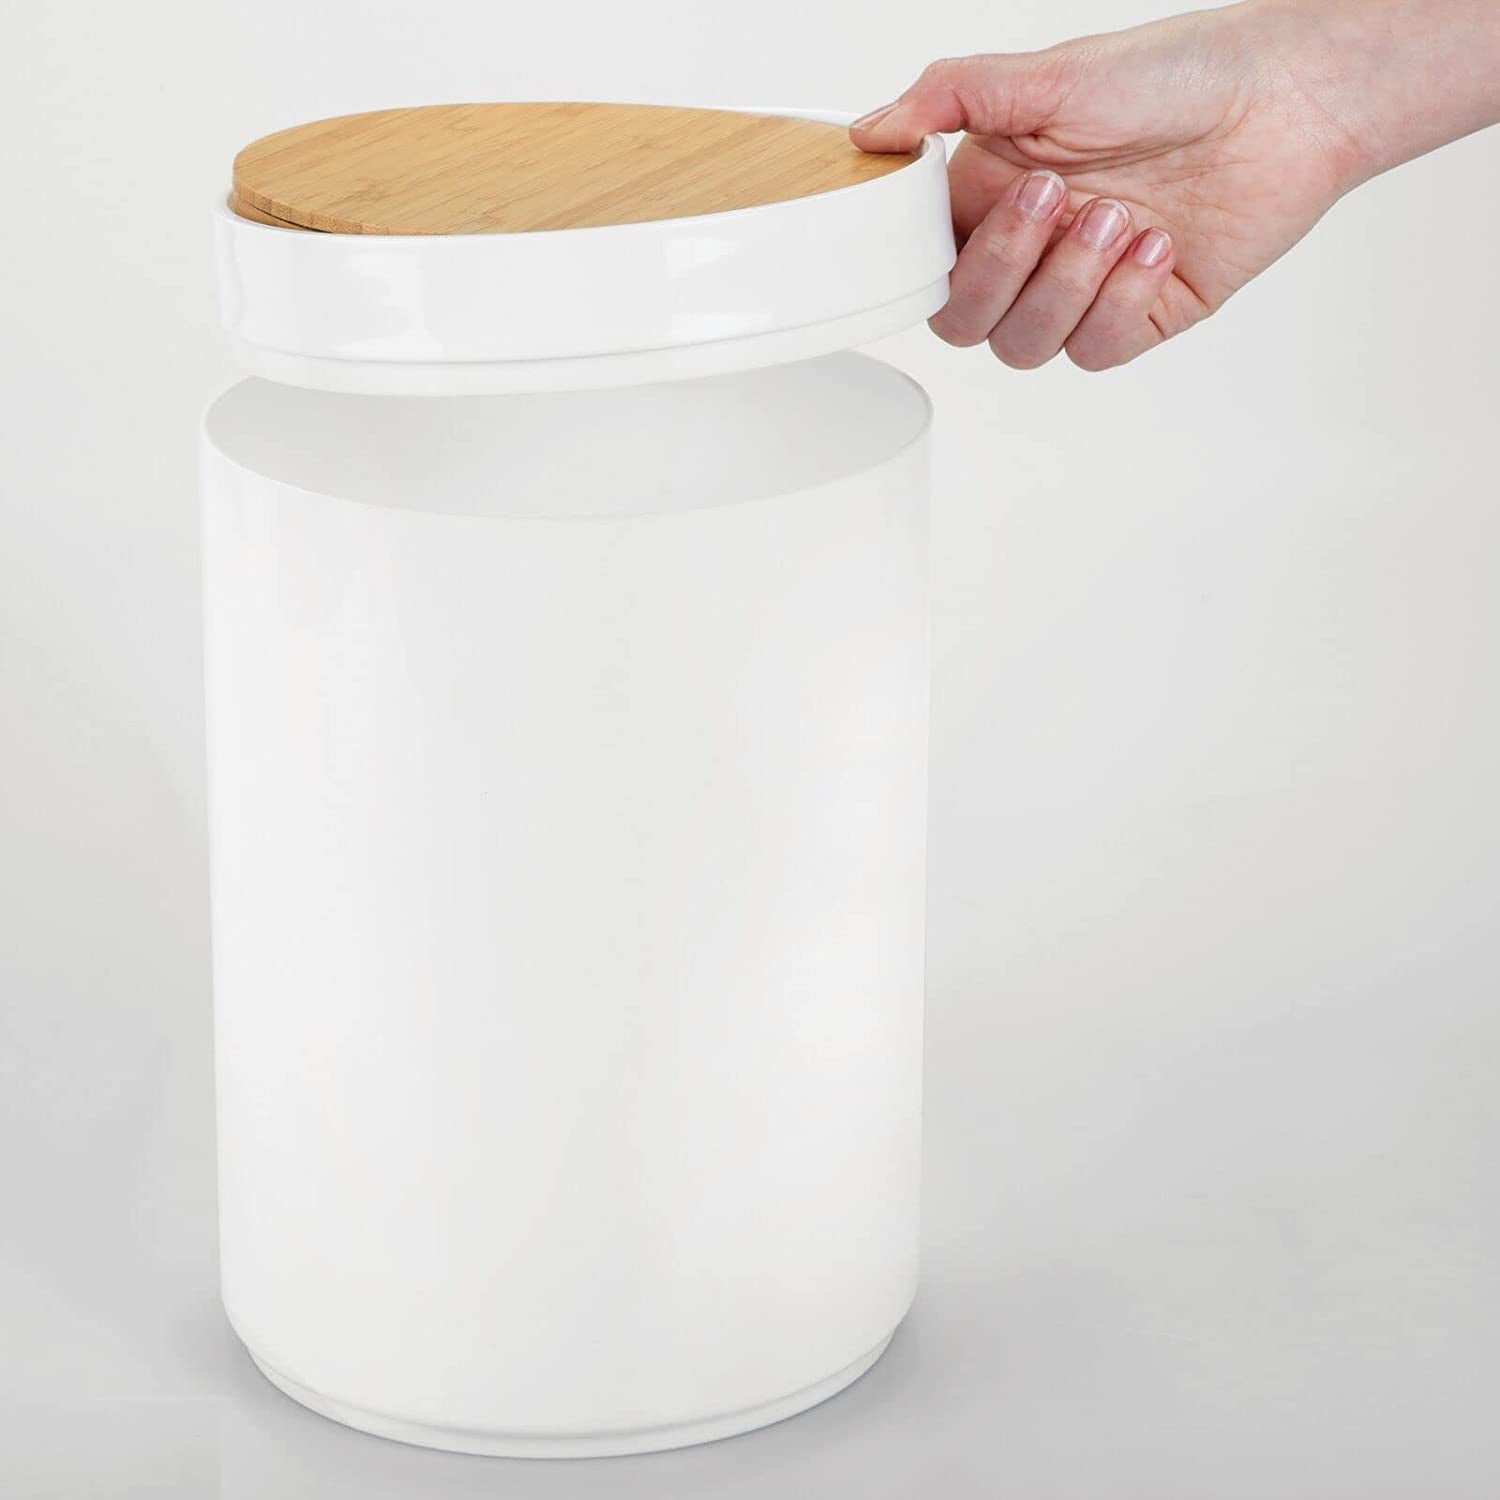 Swing Lid Bathroom Bin - Bamboo and Plastic Rubbish Bin for Bathroom - Small Trash Can - Bamboo and White